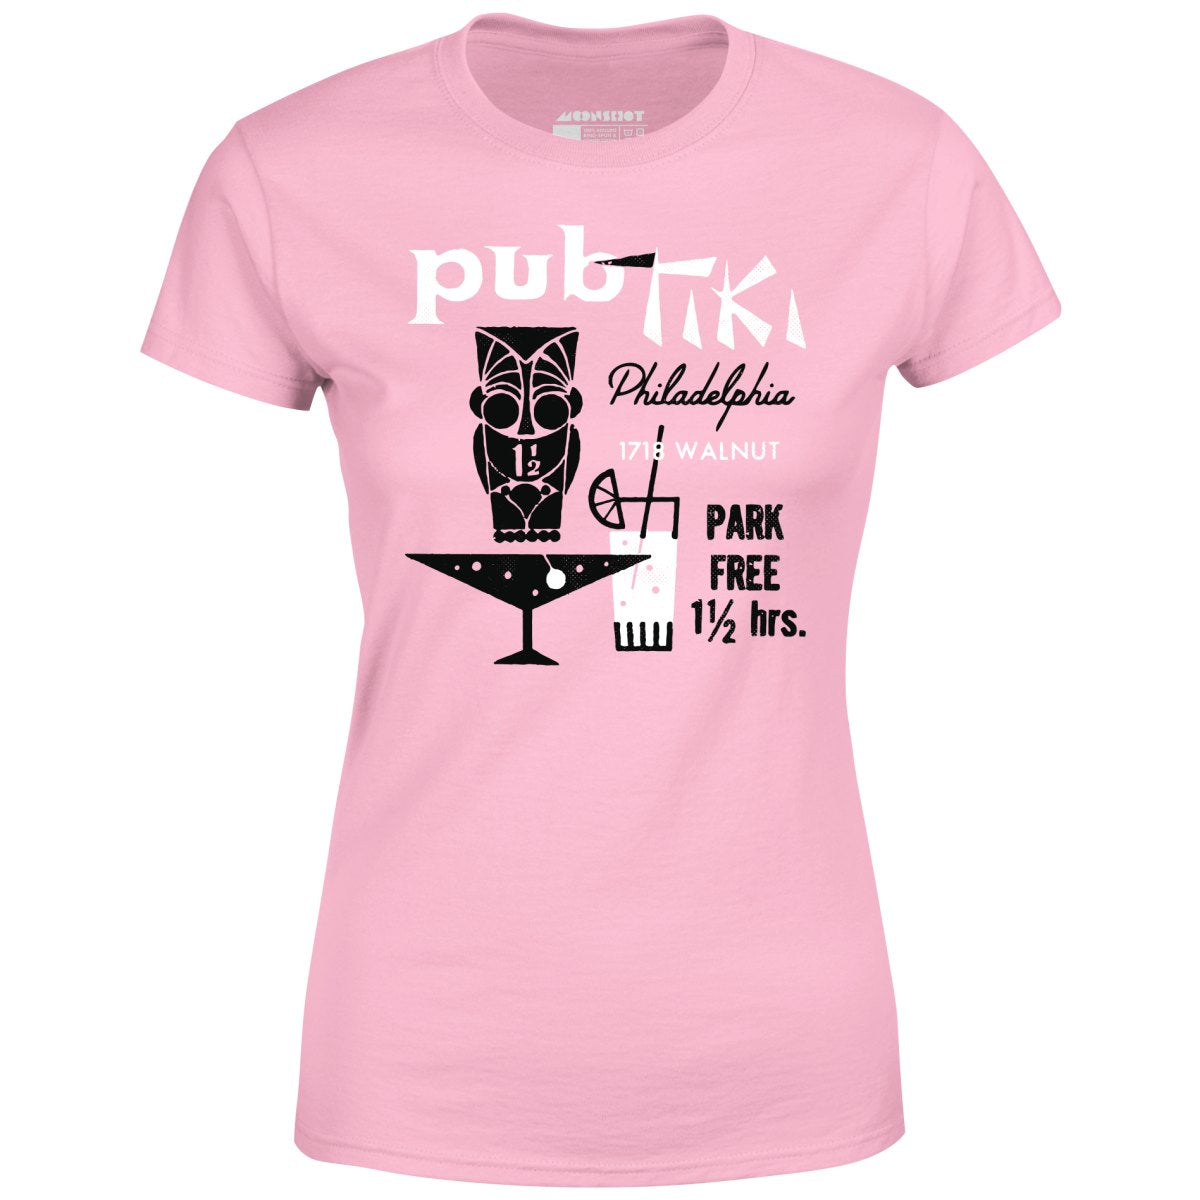 Pub Tiki - Philadelphia, PA - Vintage Tiki Bar - Women's T-Shirt